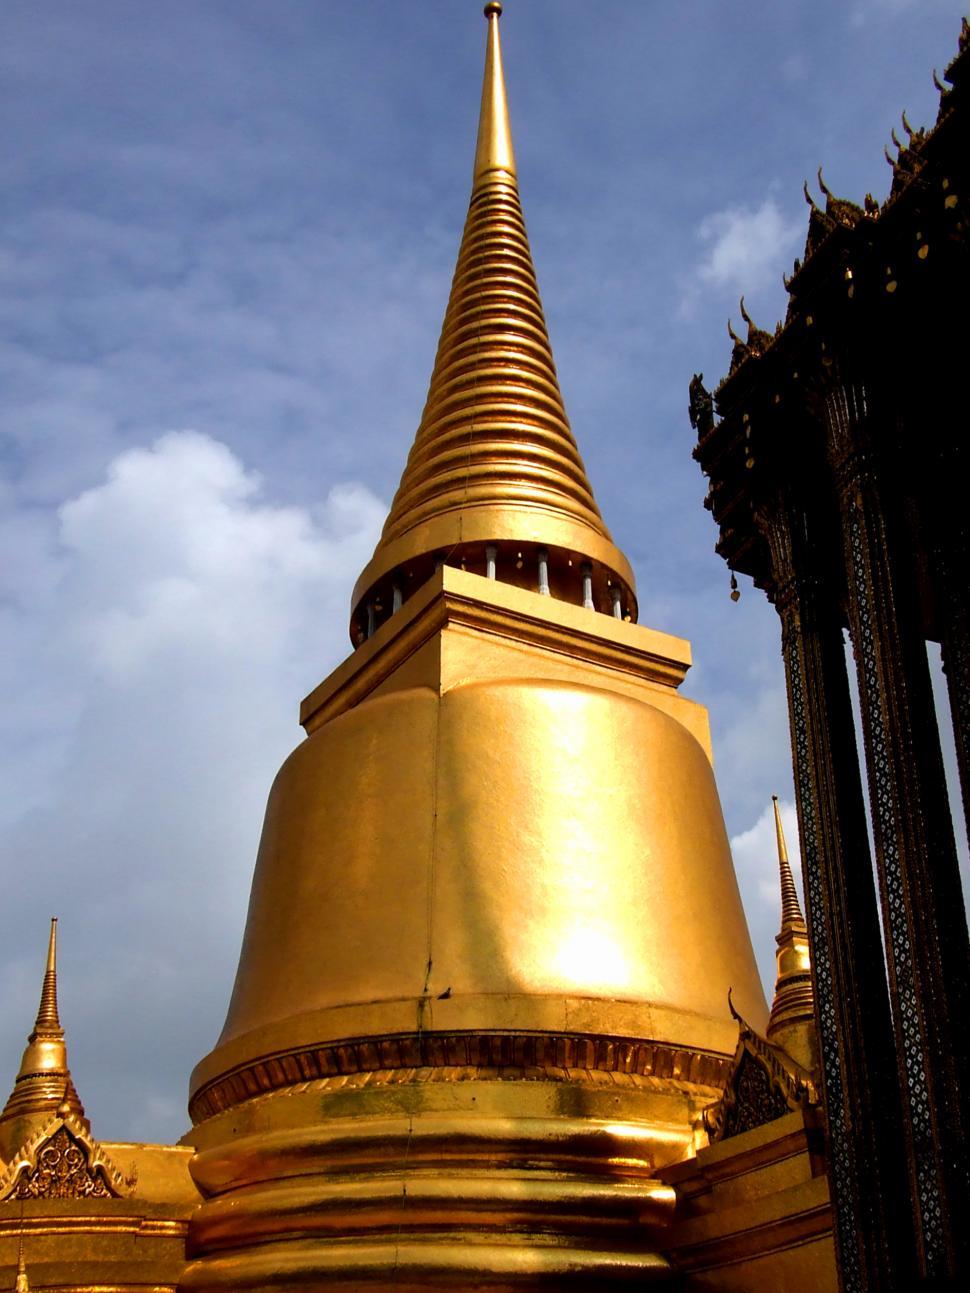 Free Image of Pagoda within the Wat Phra Kaew palace grounds in Bangkok - Thai 